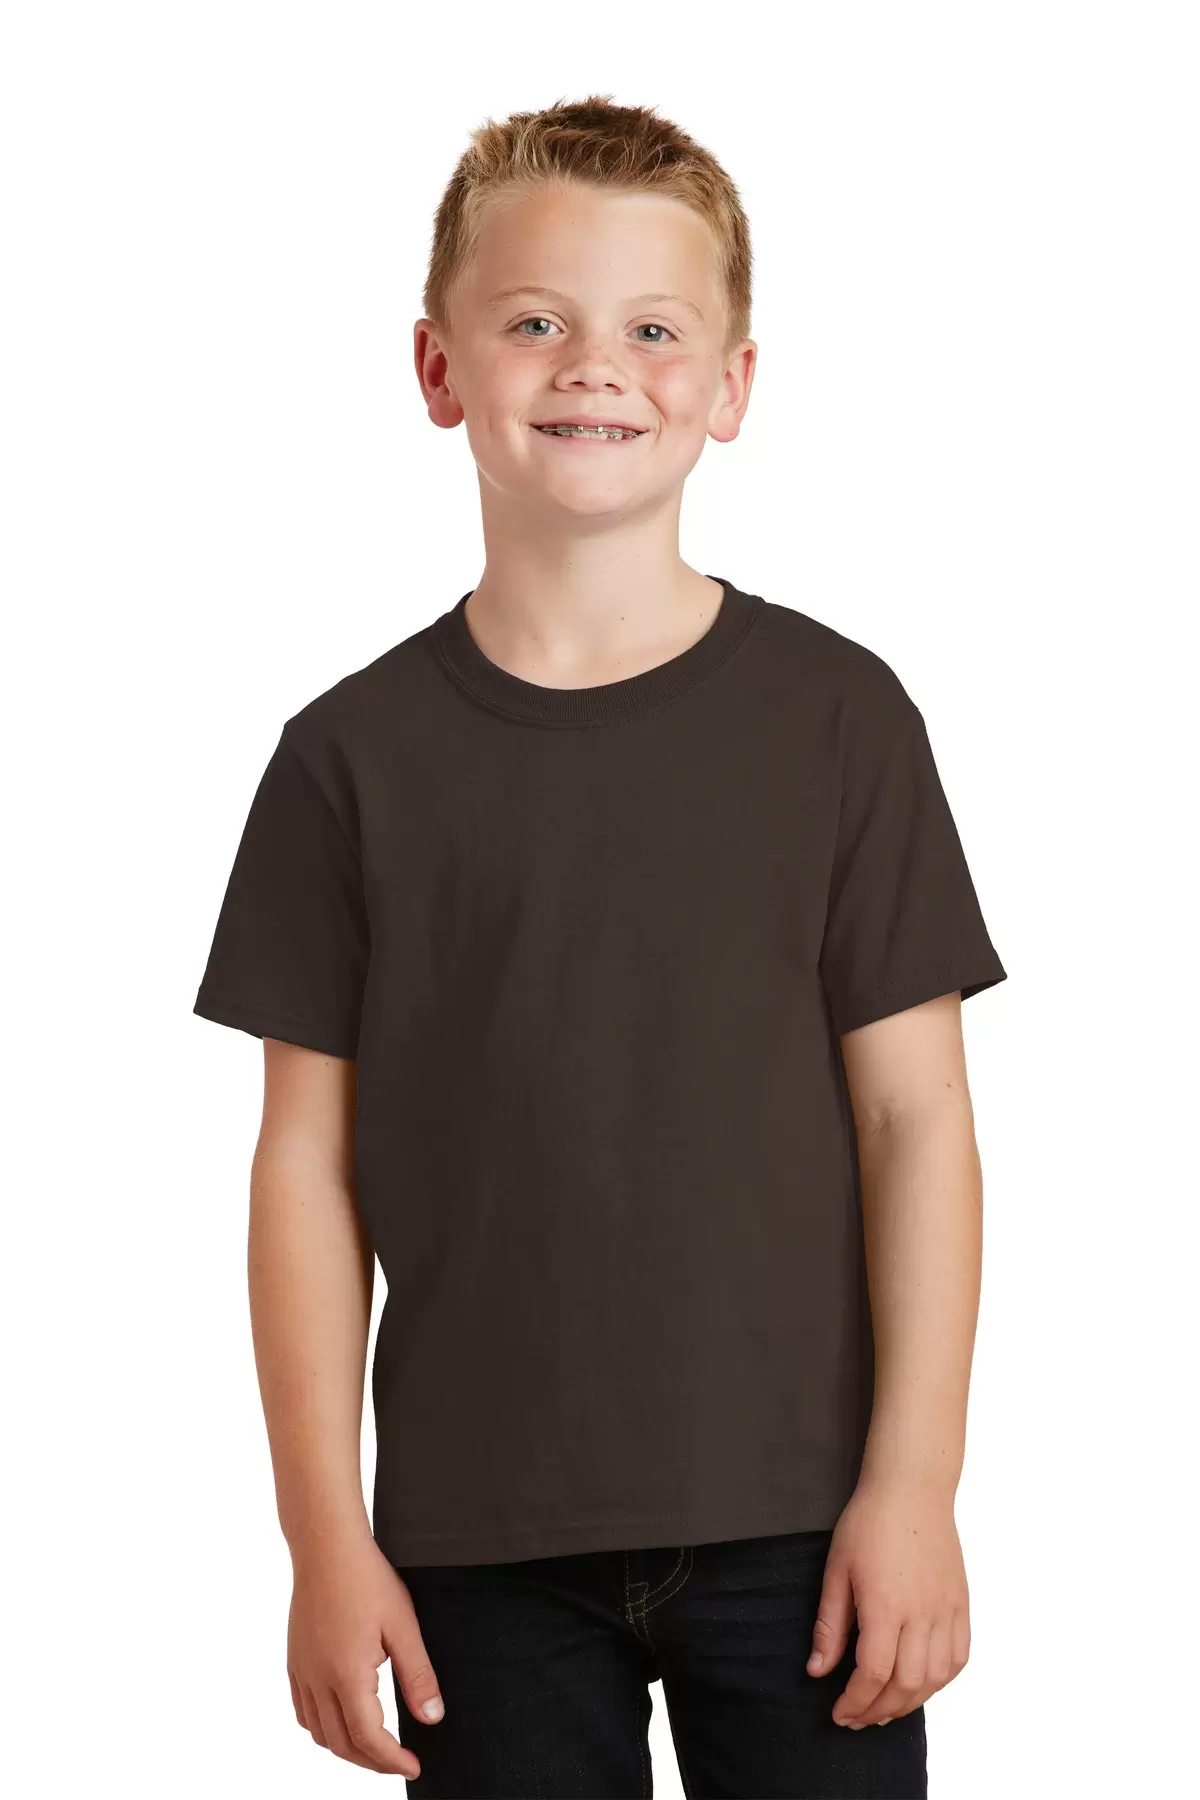 margen Tilbageholdenhed Svin Port & Company Youth 5.4 oz 100 Cotton T Shirt PC54Y Dk Choc Brown